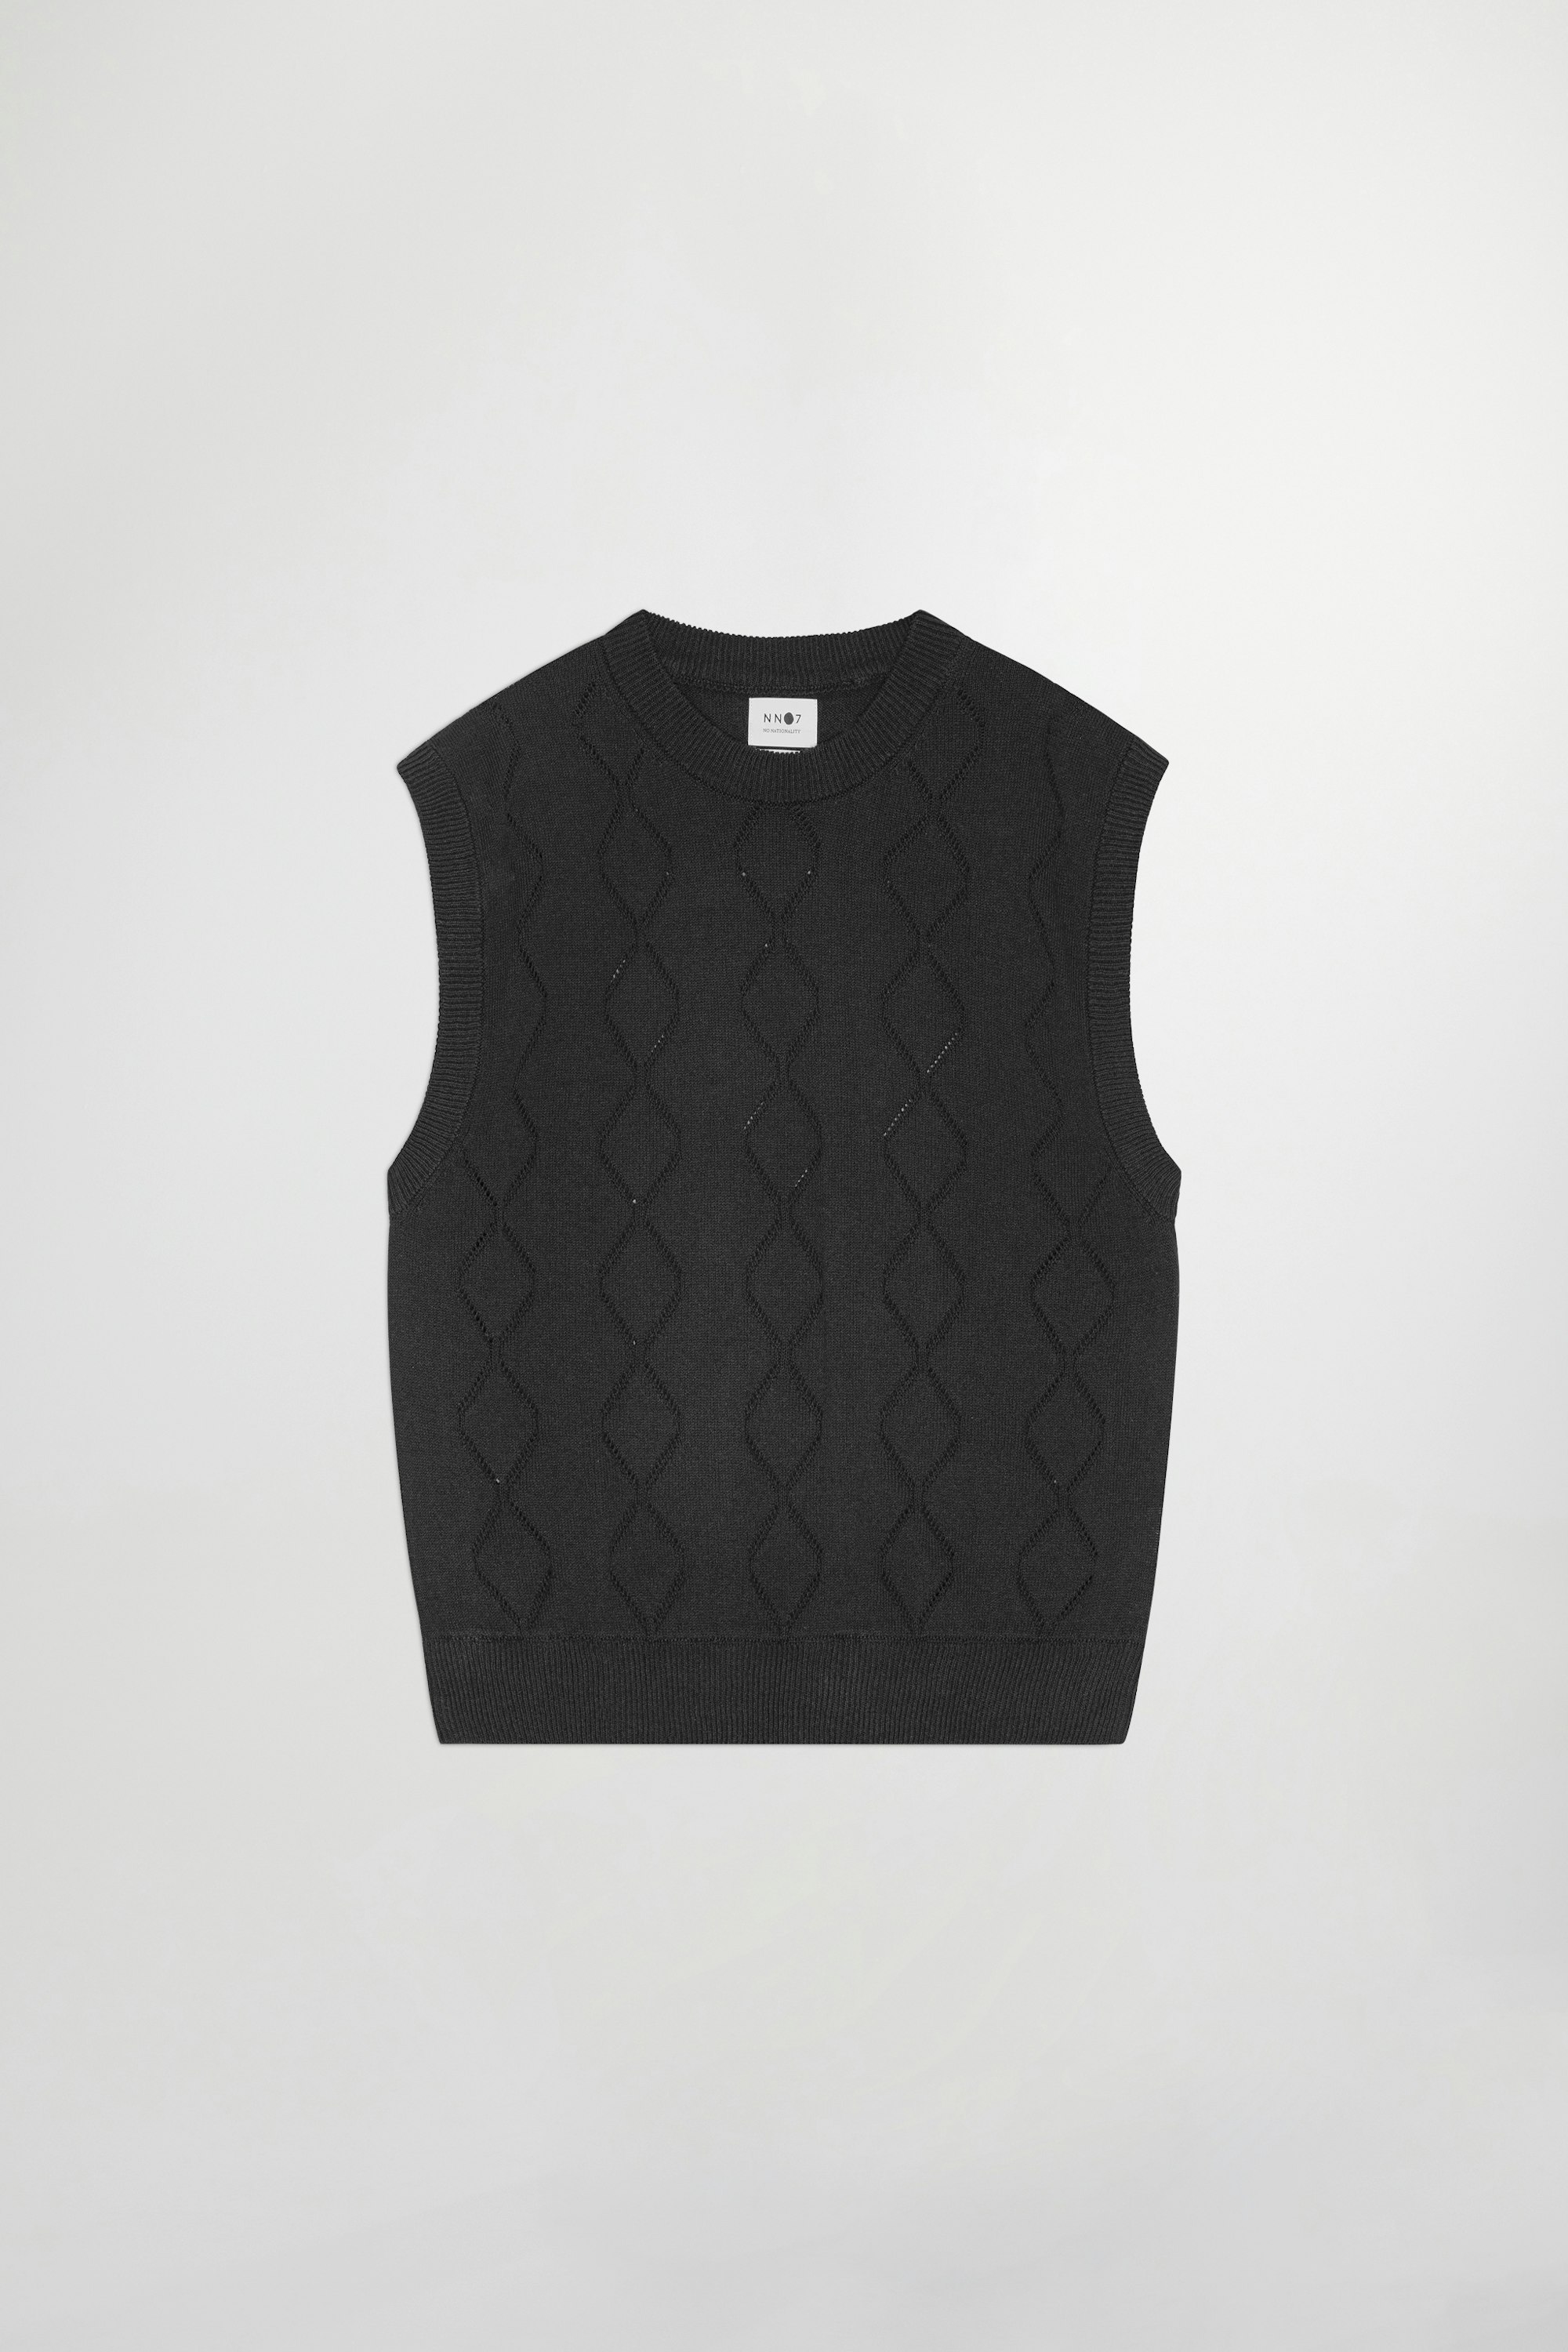 Crew neck vest 6571 men's vest - Black - Buy online at NN.07®